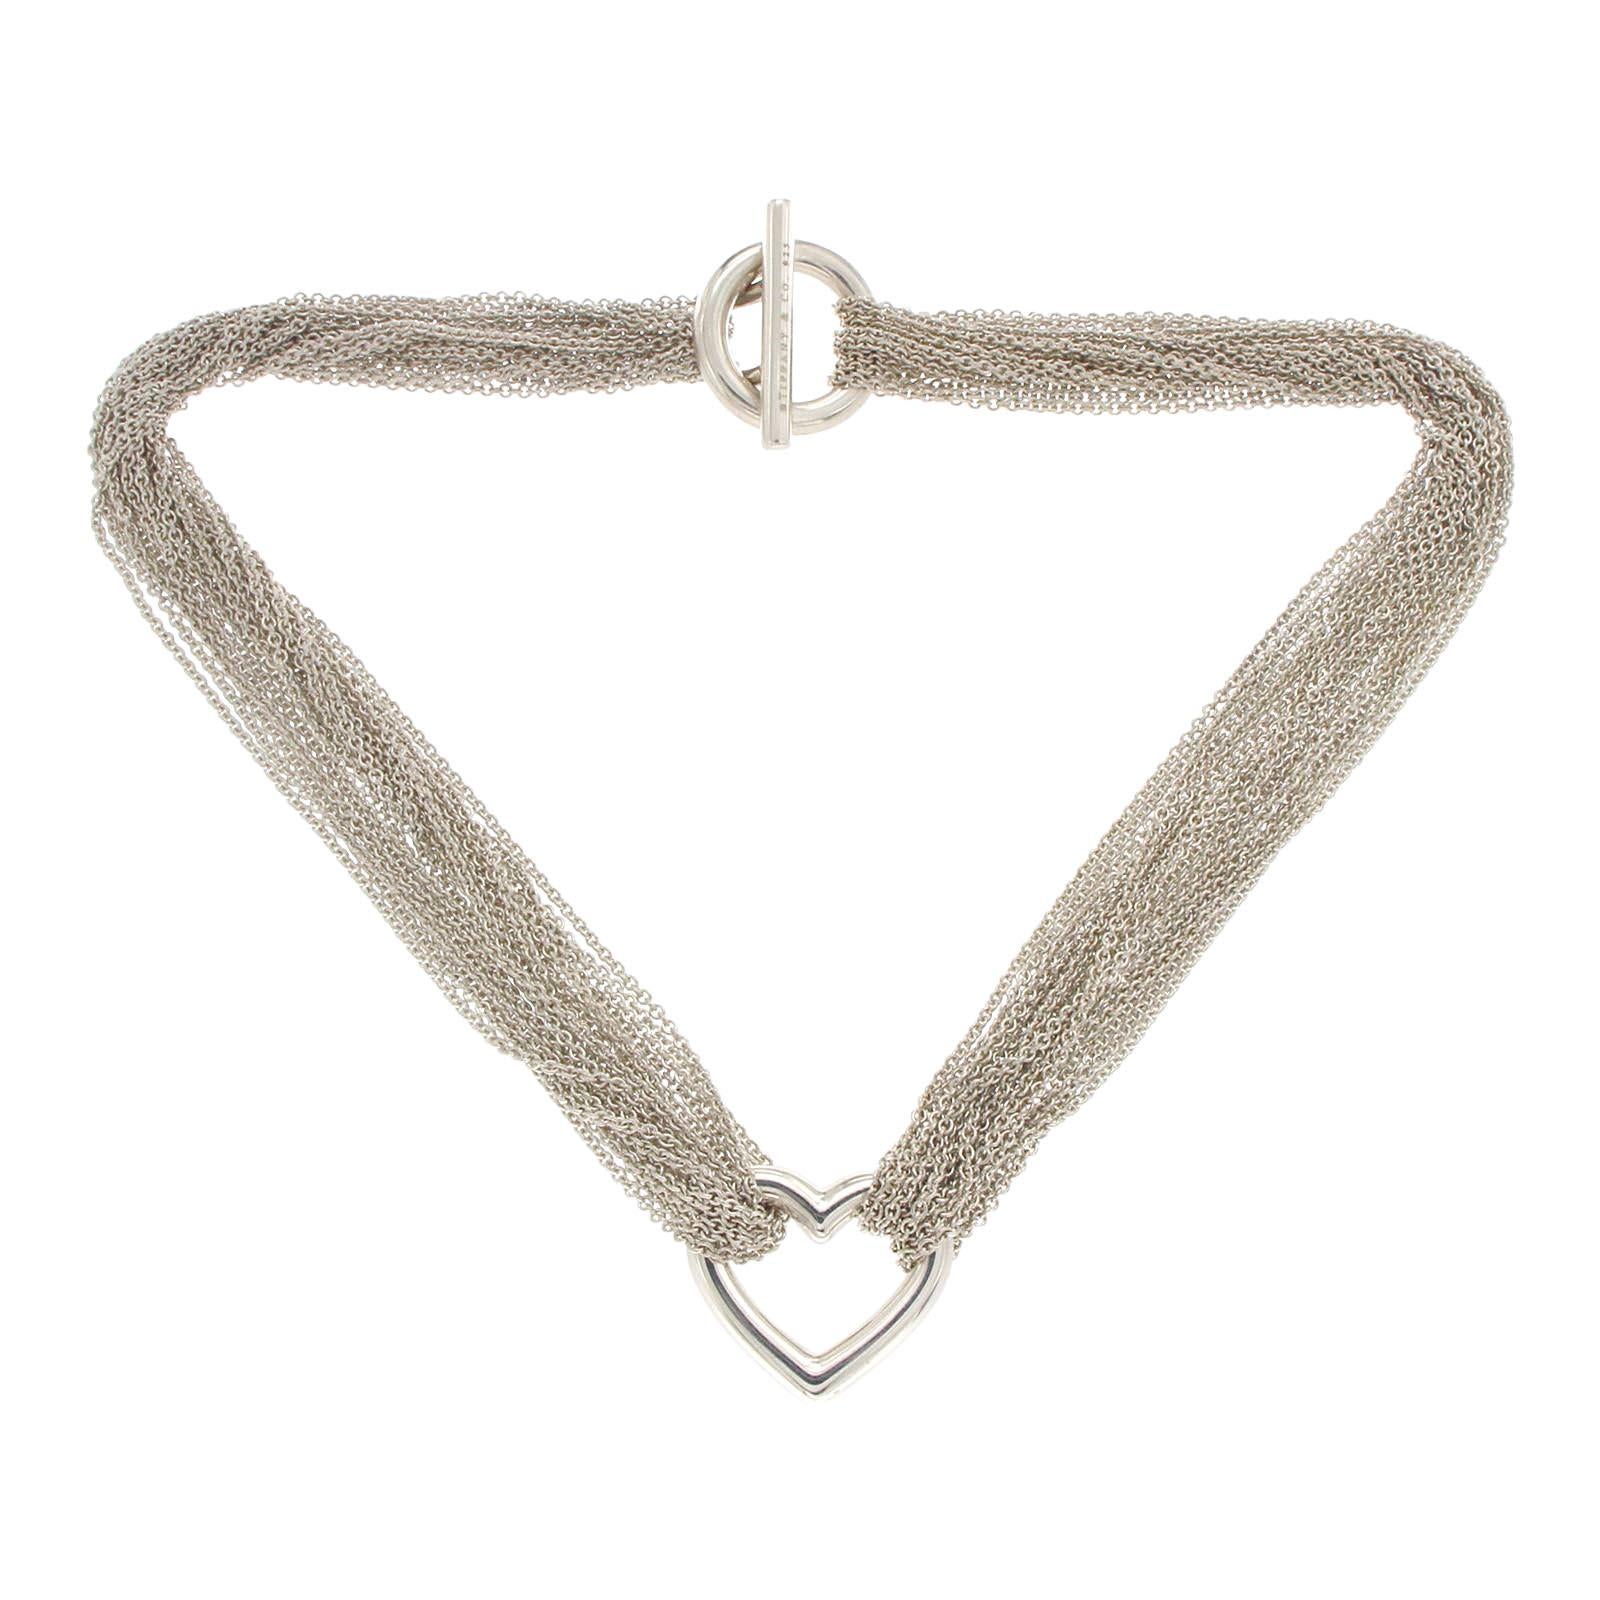 Tiffany & Co. Sterling Silver Heart Multi Strand Mesh Toggle Necklace